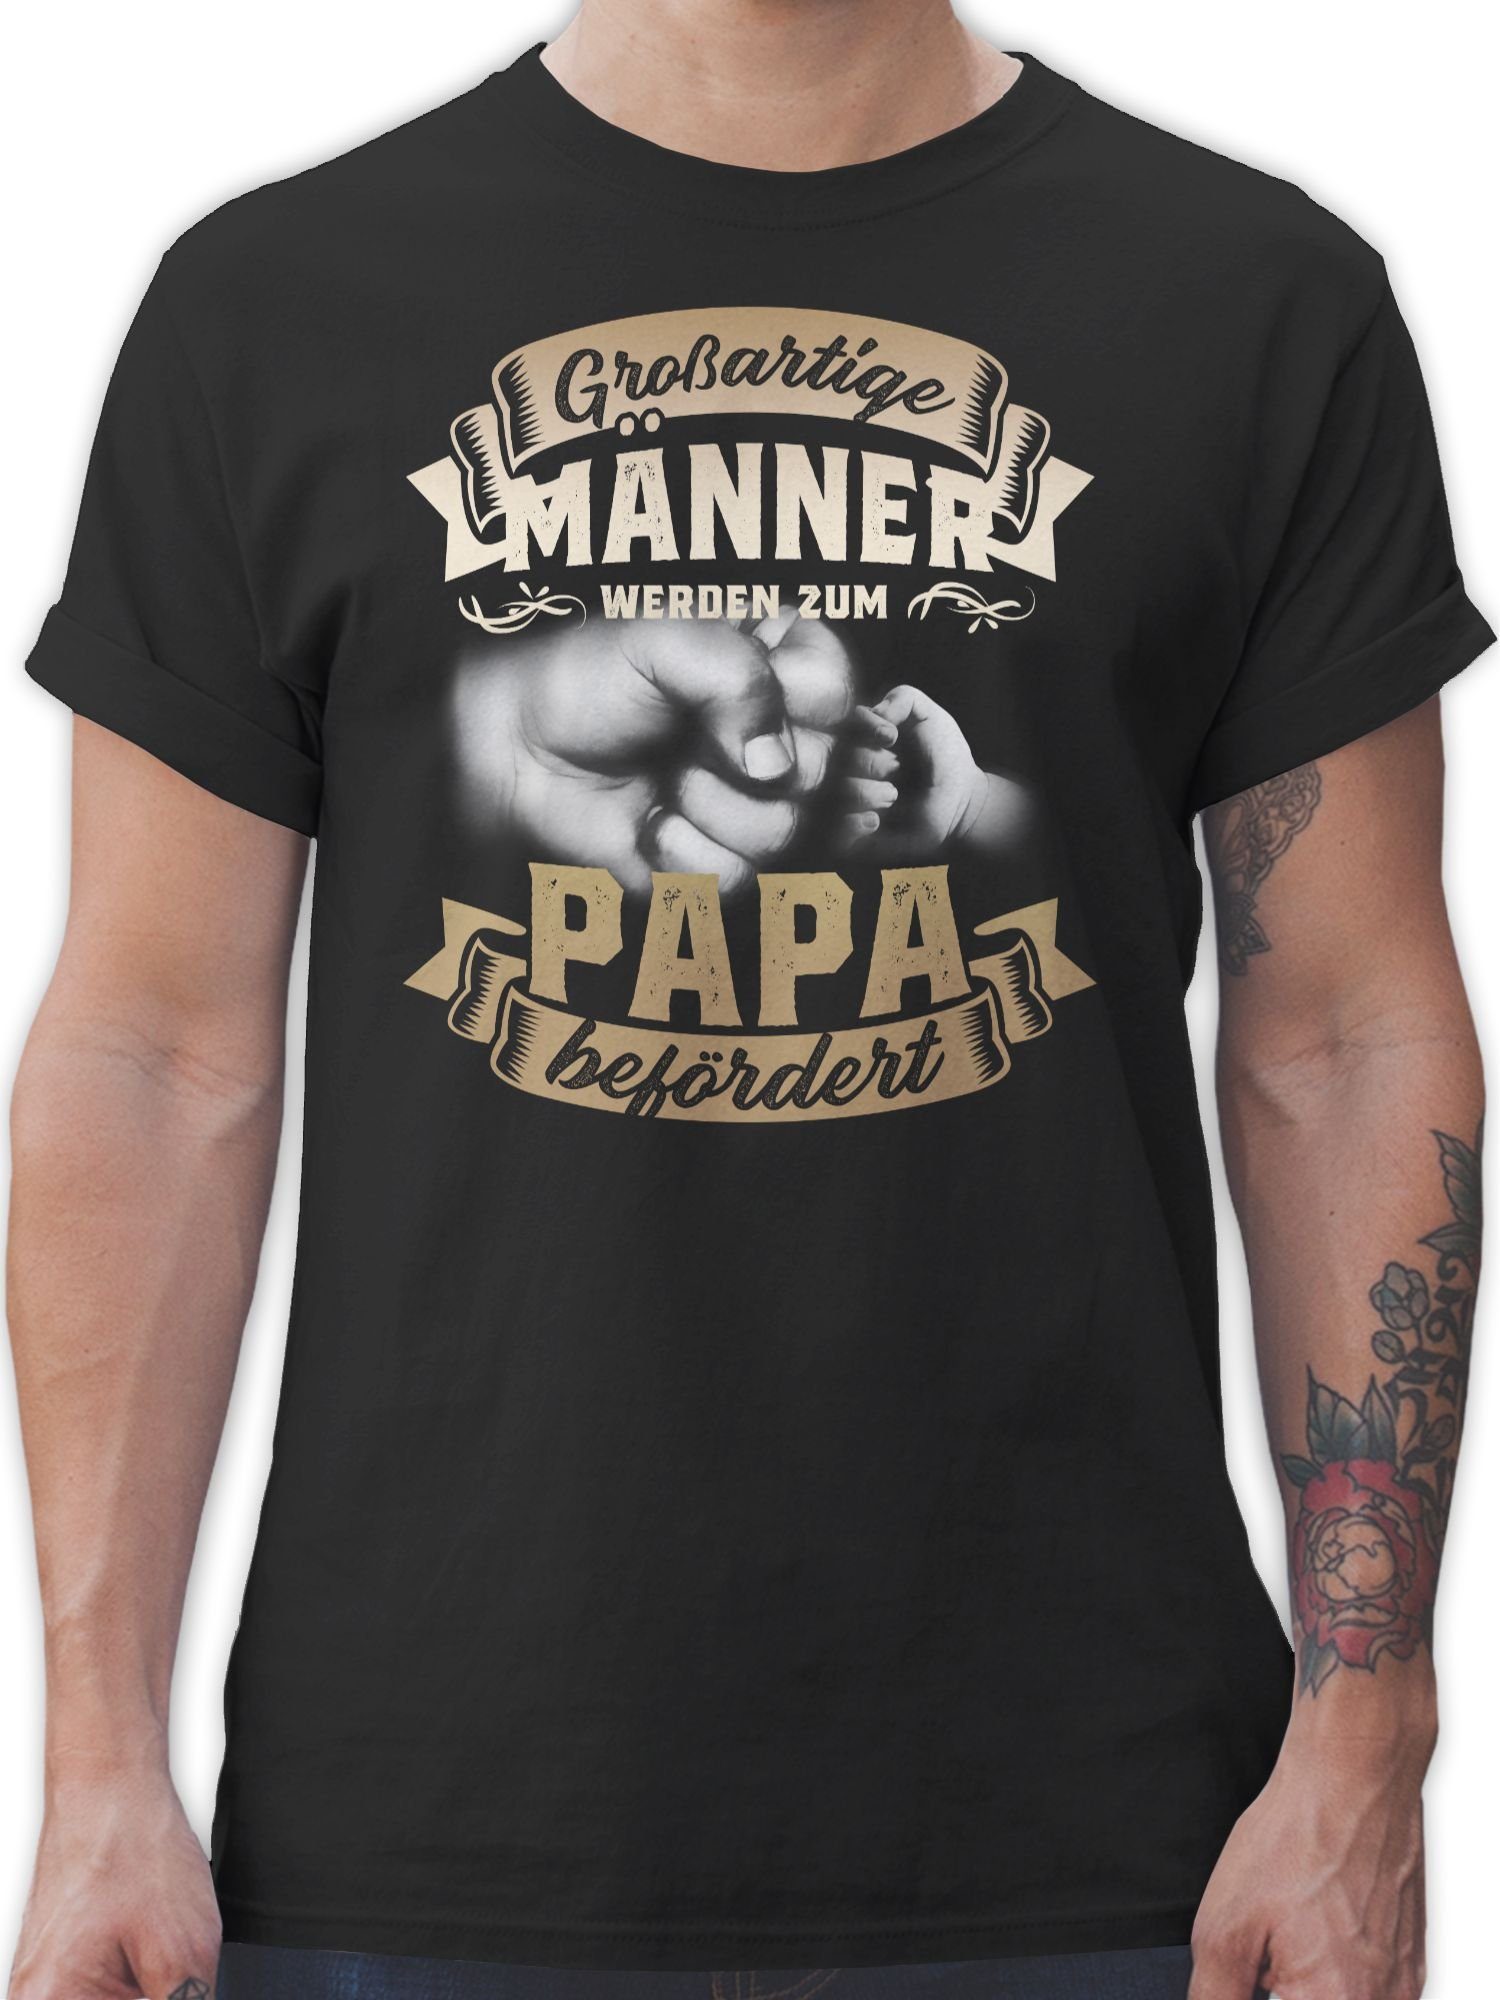 Shirtracer T-Shirt Großartige Männer werden zum Papa befördert - Geschenk Geburt Väter Vatertag Geschenk für Papa 01 Schwarz